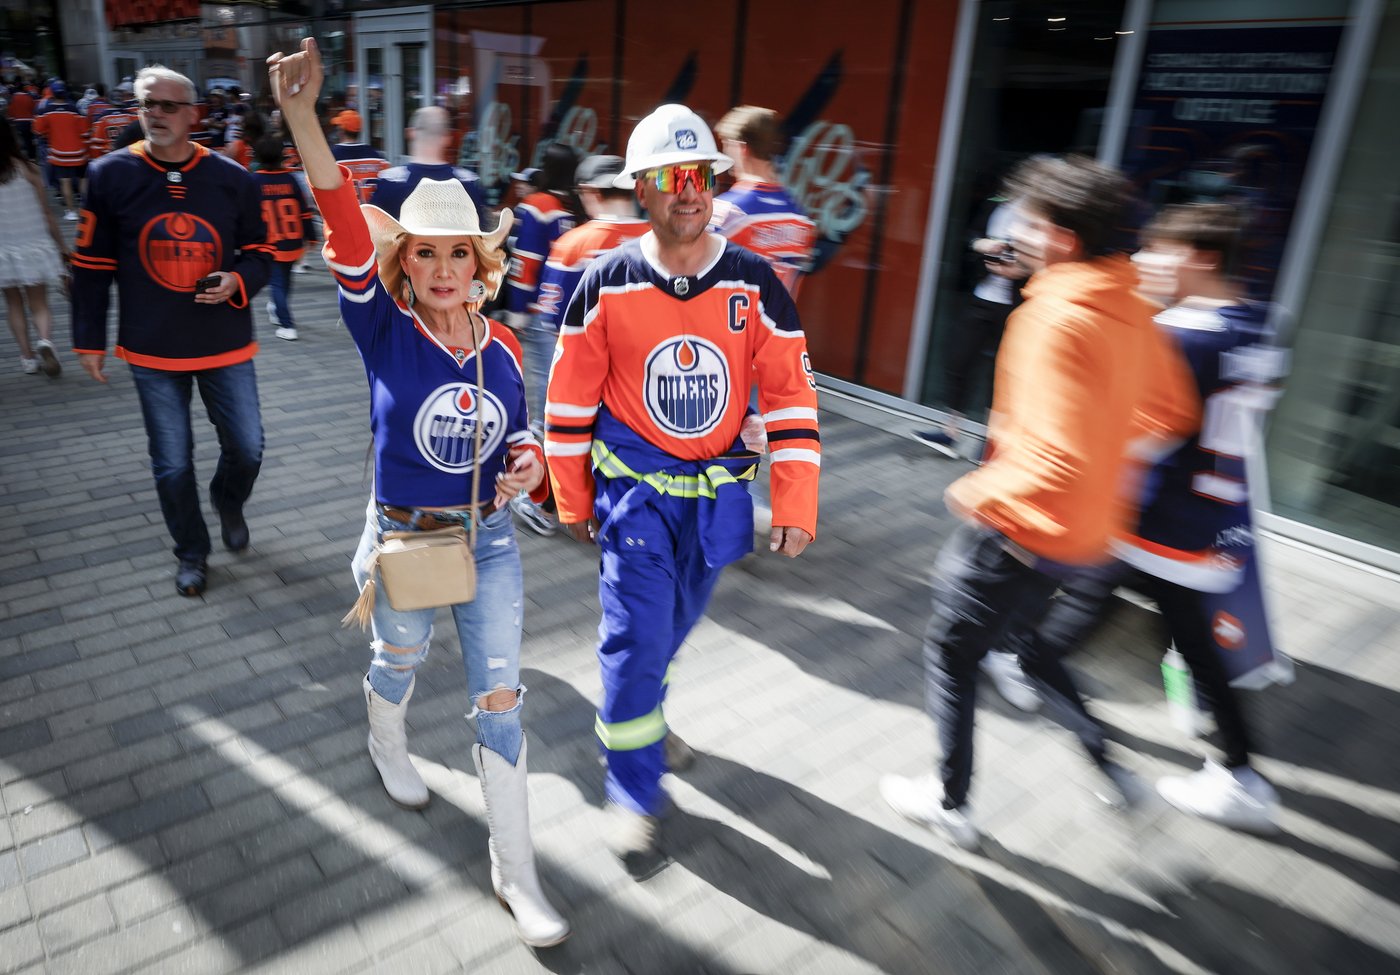 Cheering fans jam Edmonton plaza as Oilers force winnertakeall